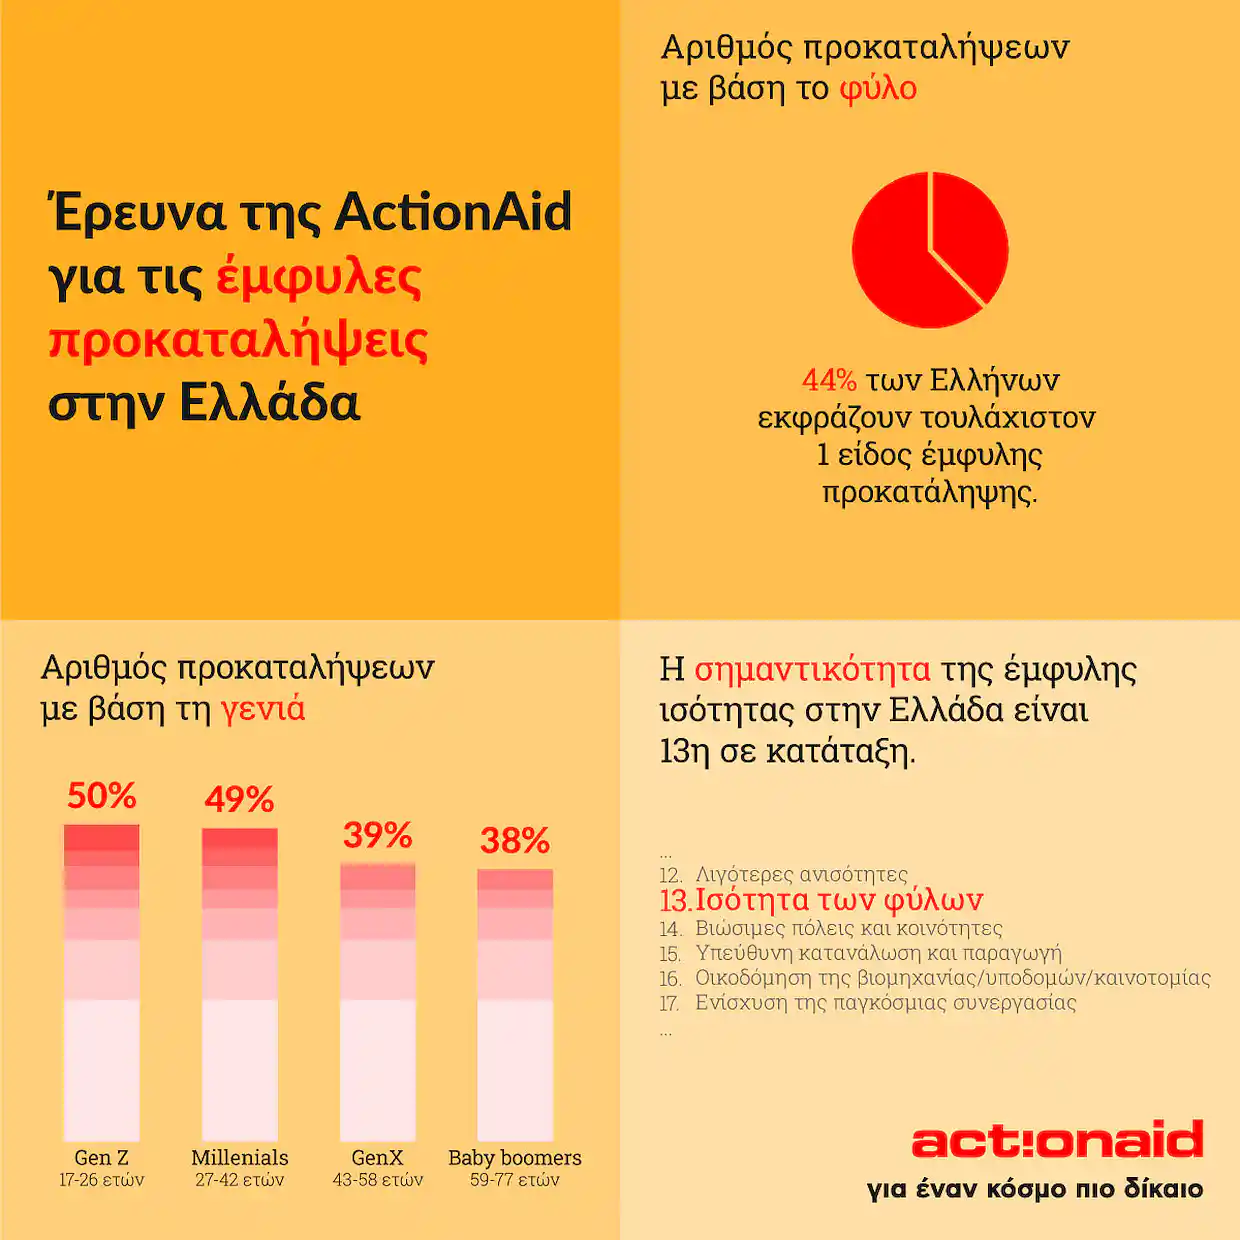 Actionaid: Σχεδόν το 50% στην Ελλάδα έχει τουλάχιστον μία προκατάληψη για τις γυναίκες